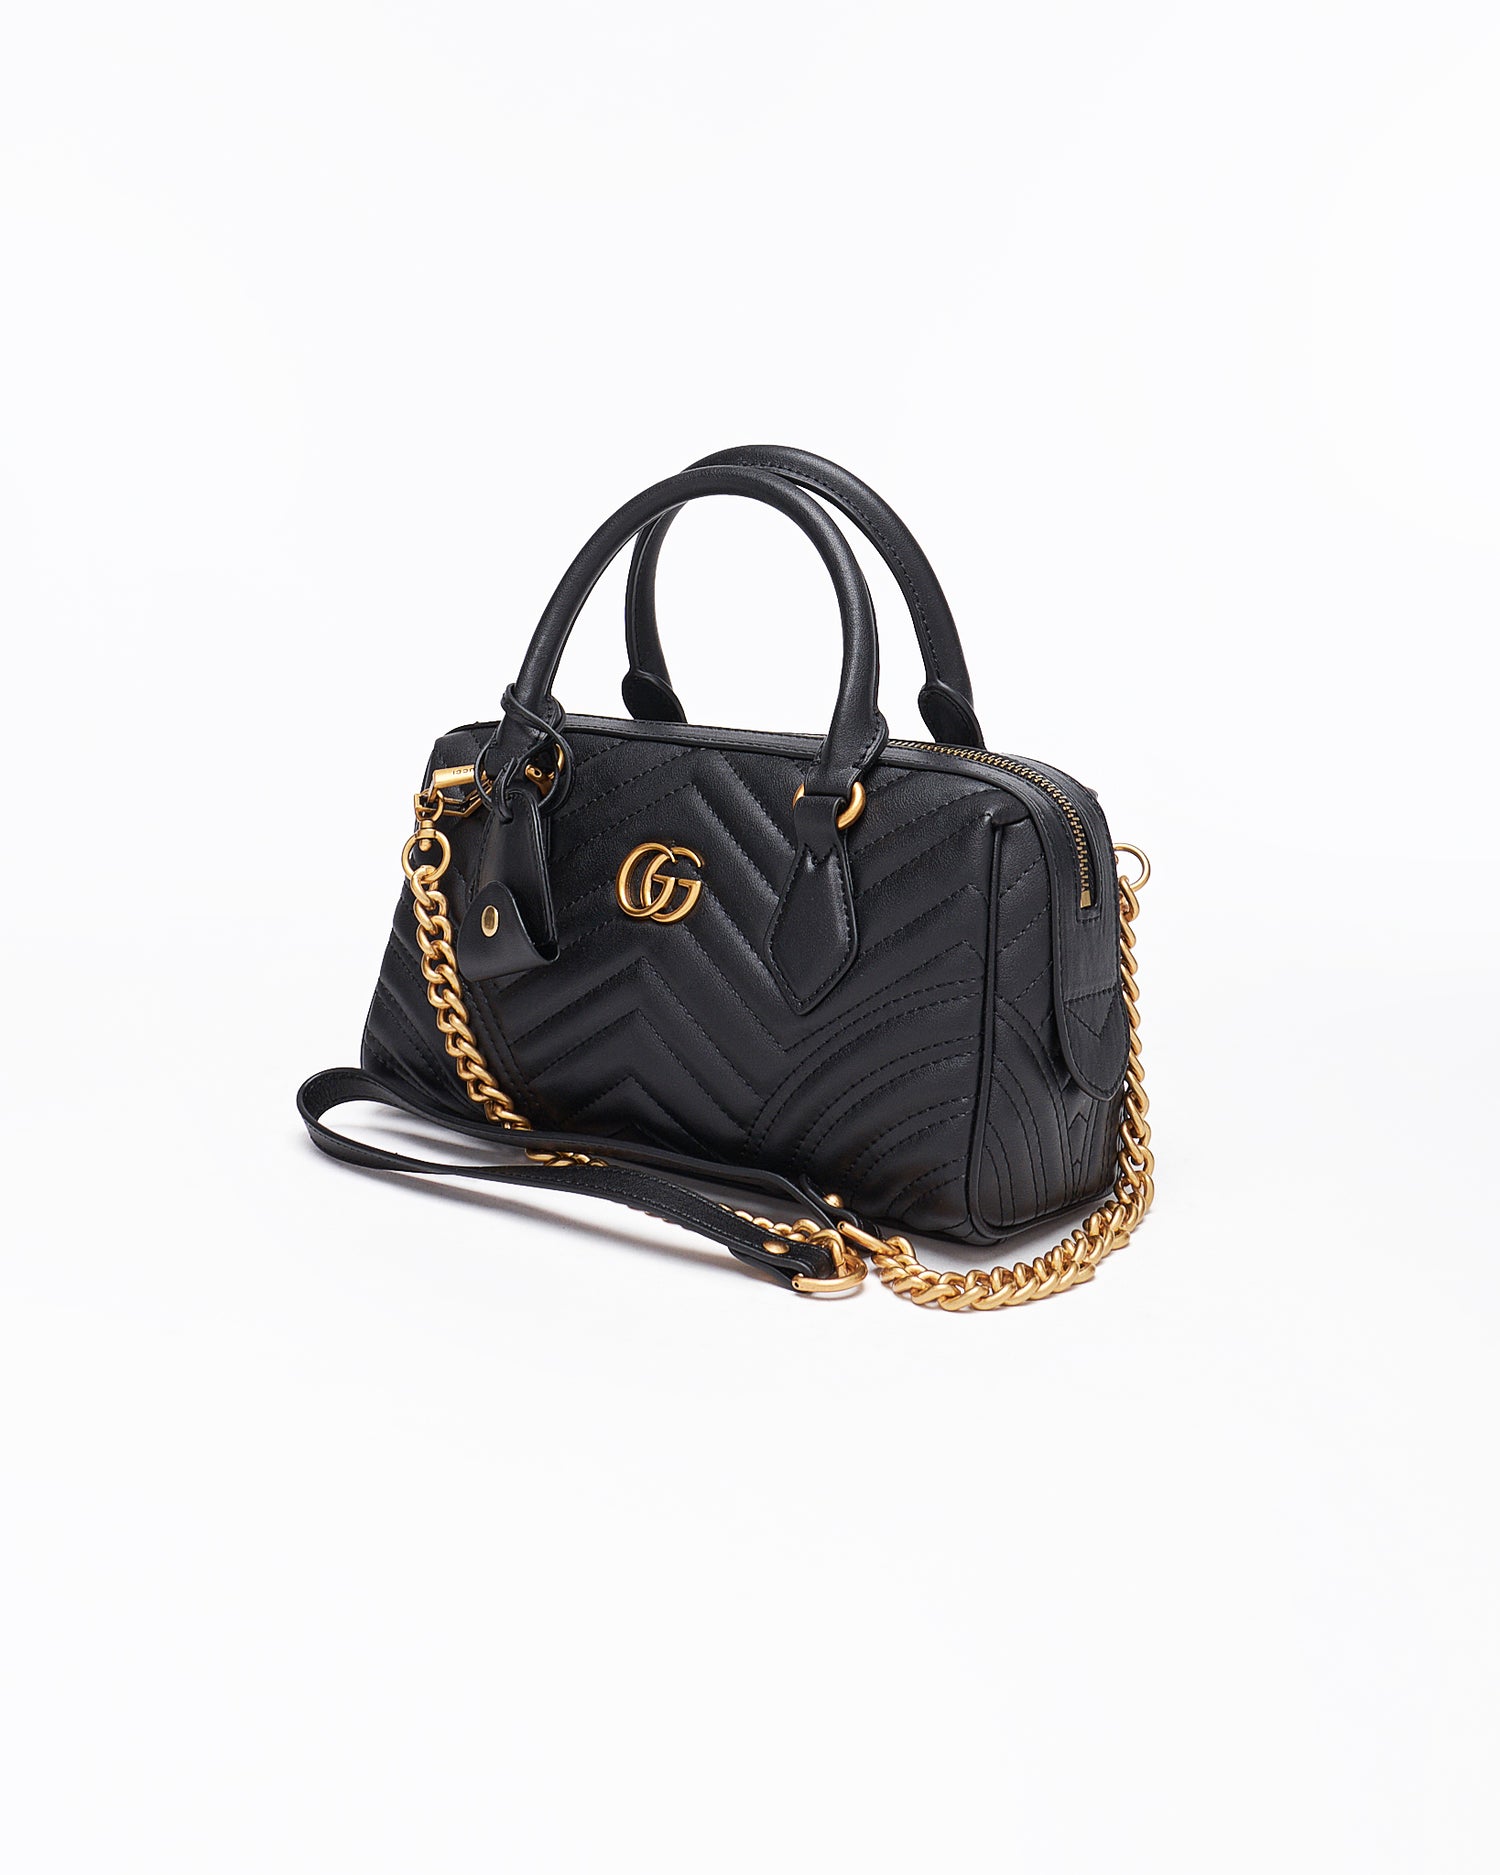 GUC Marmont Lady Black Shoulder Bag 79.90